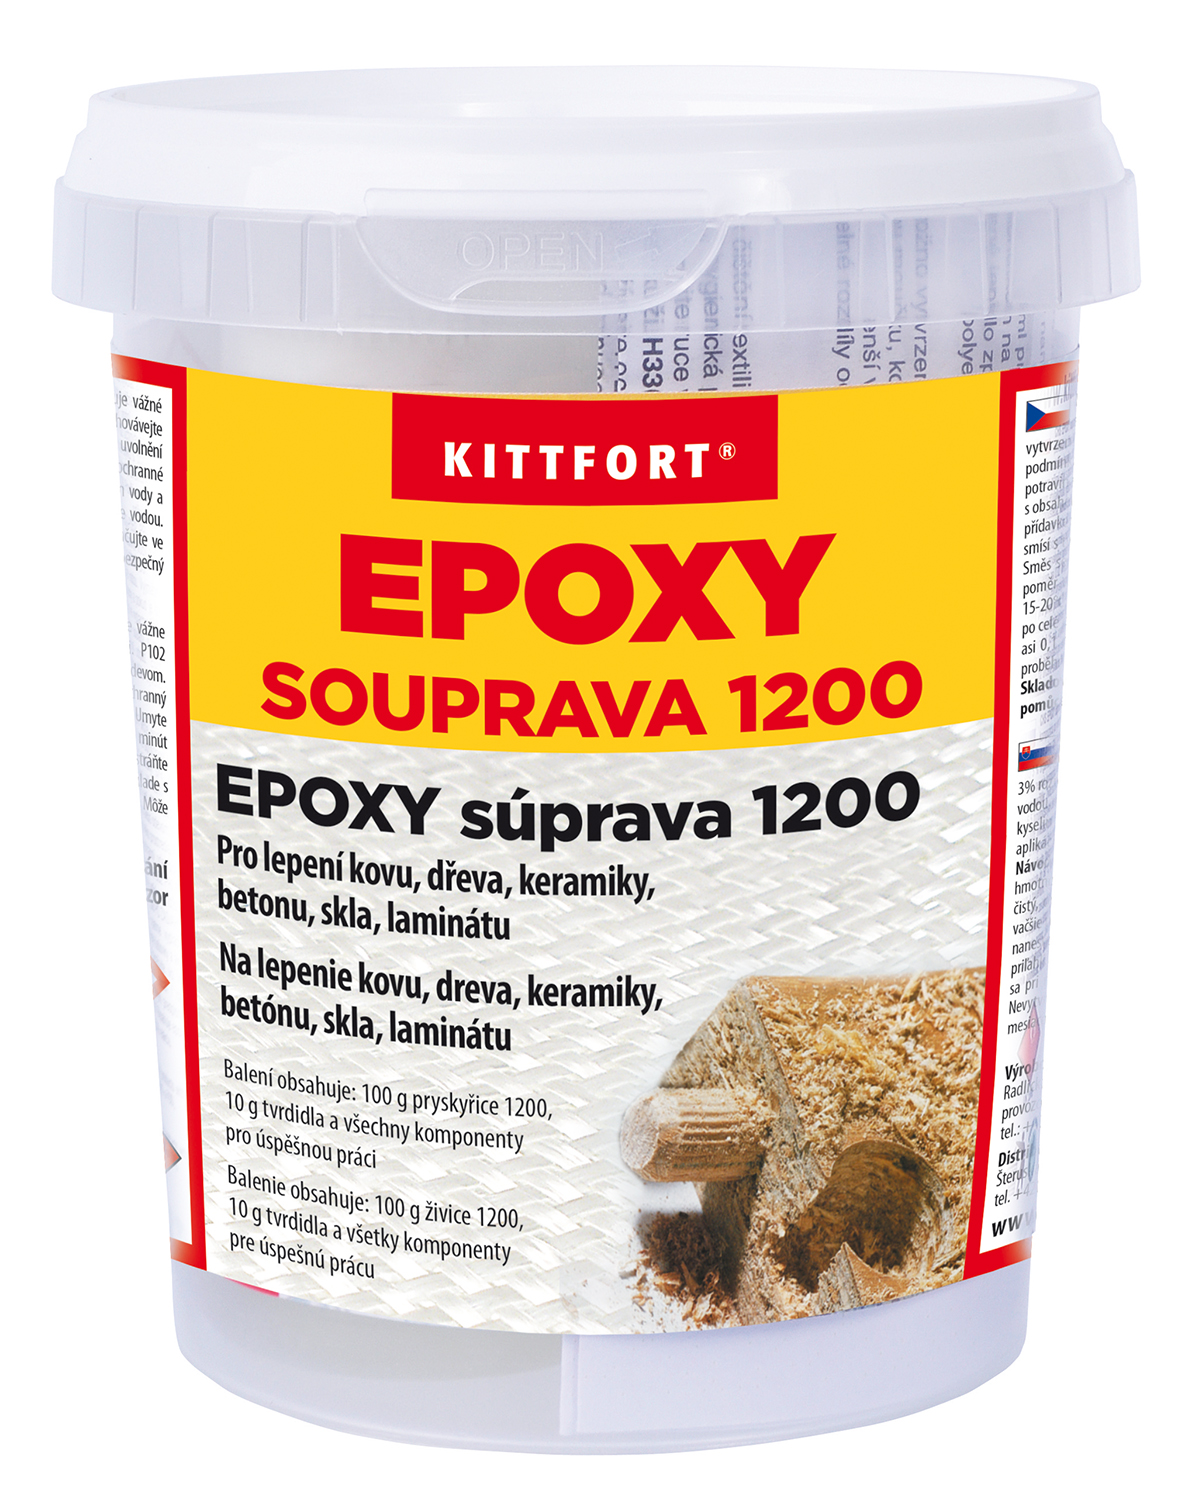 Epoxy souprava 1200